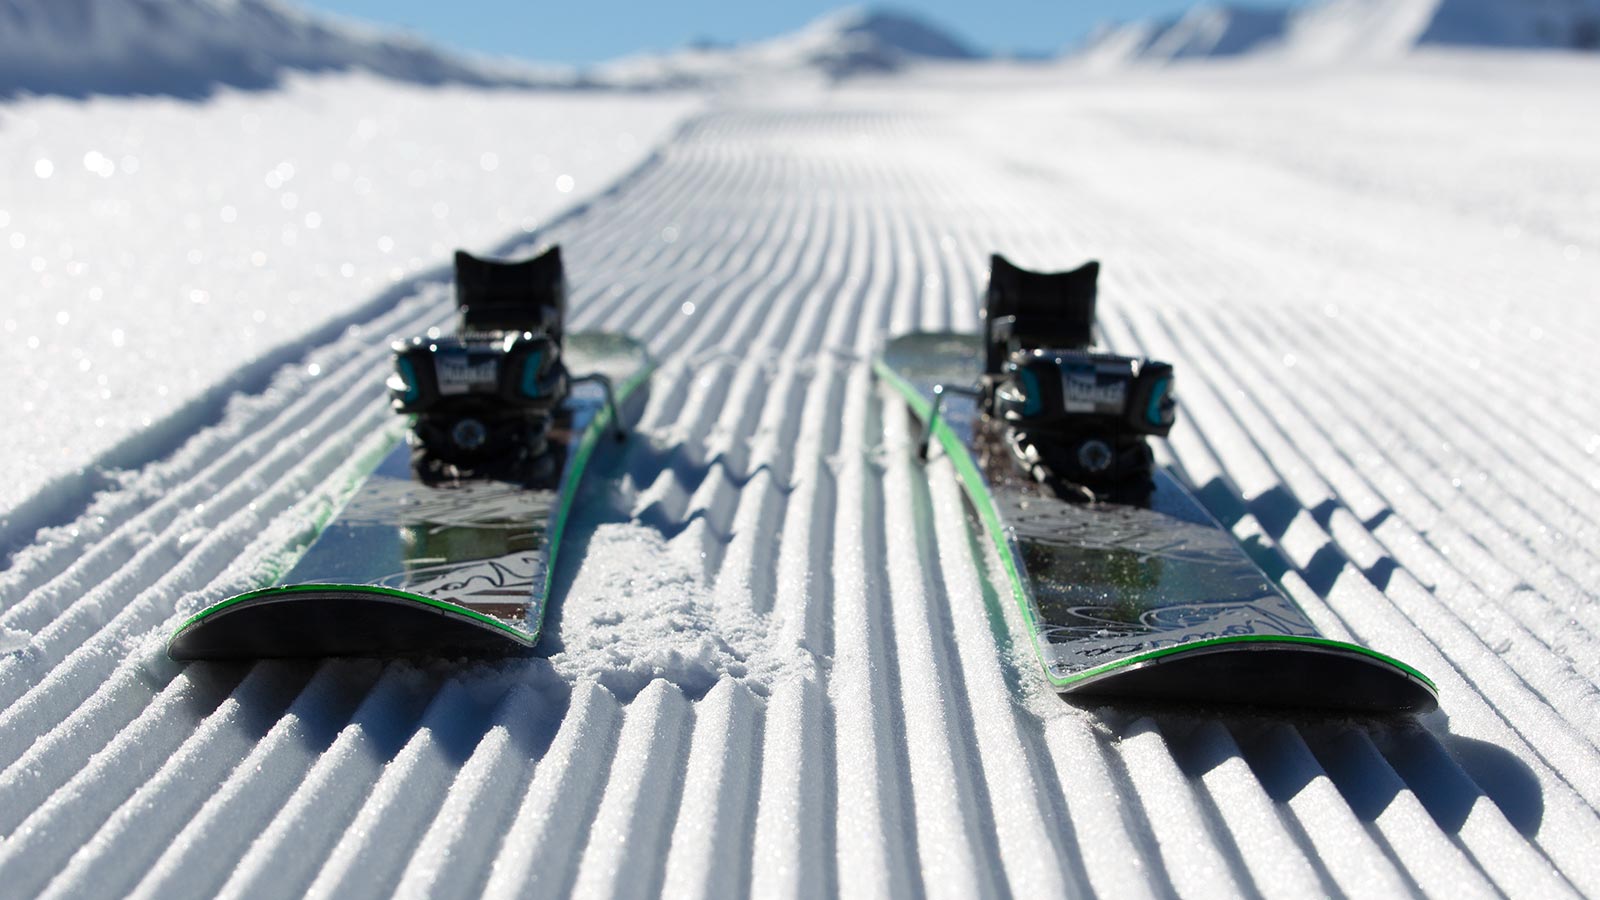 Tavola da snowboard sopra neve appena battuta